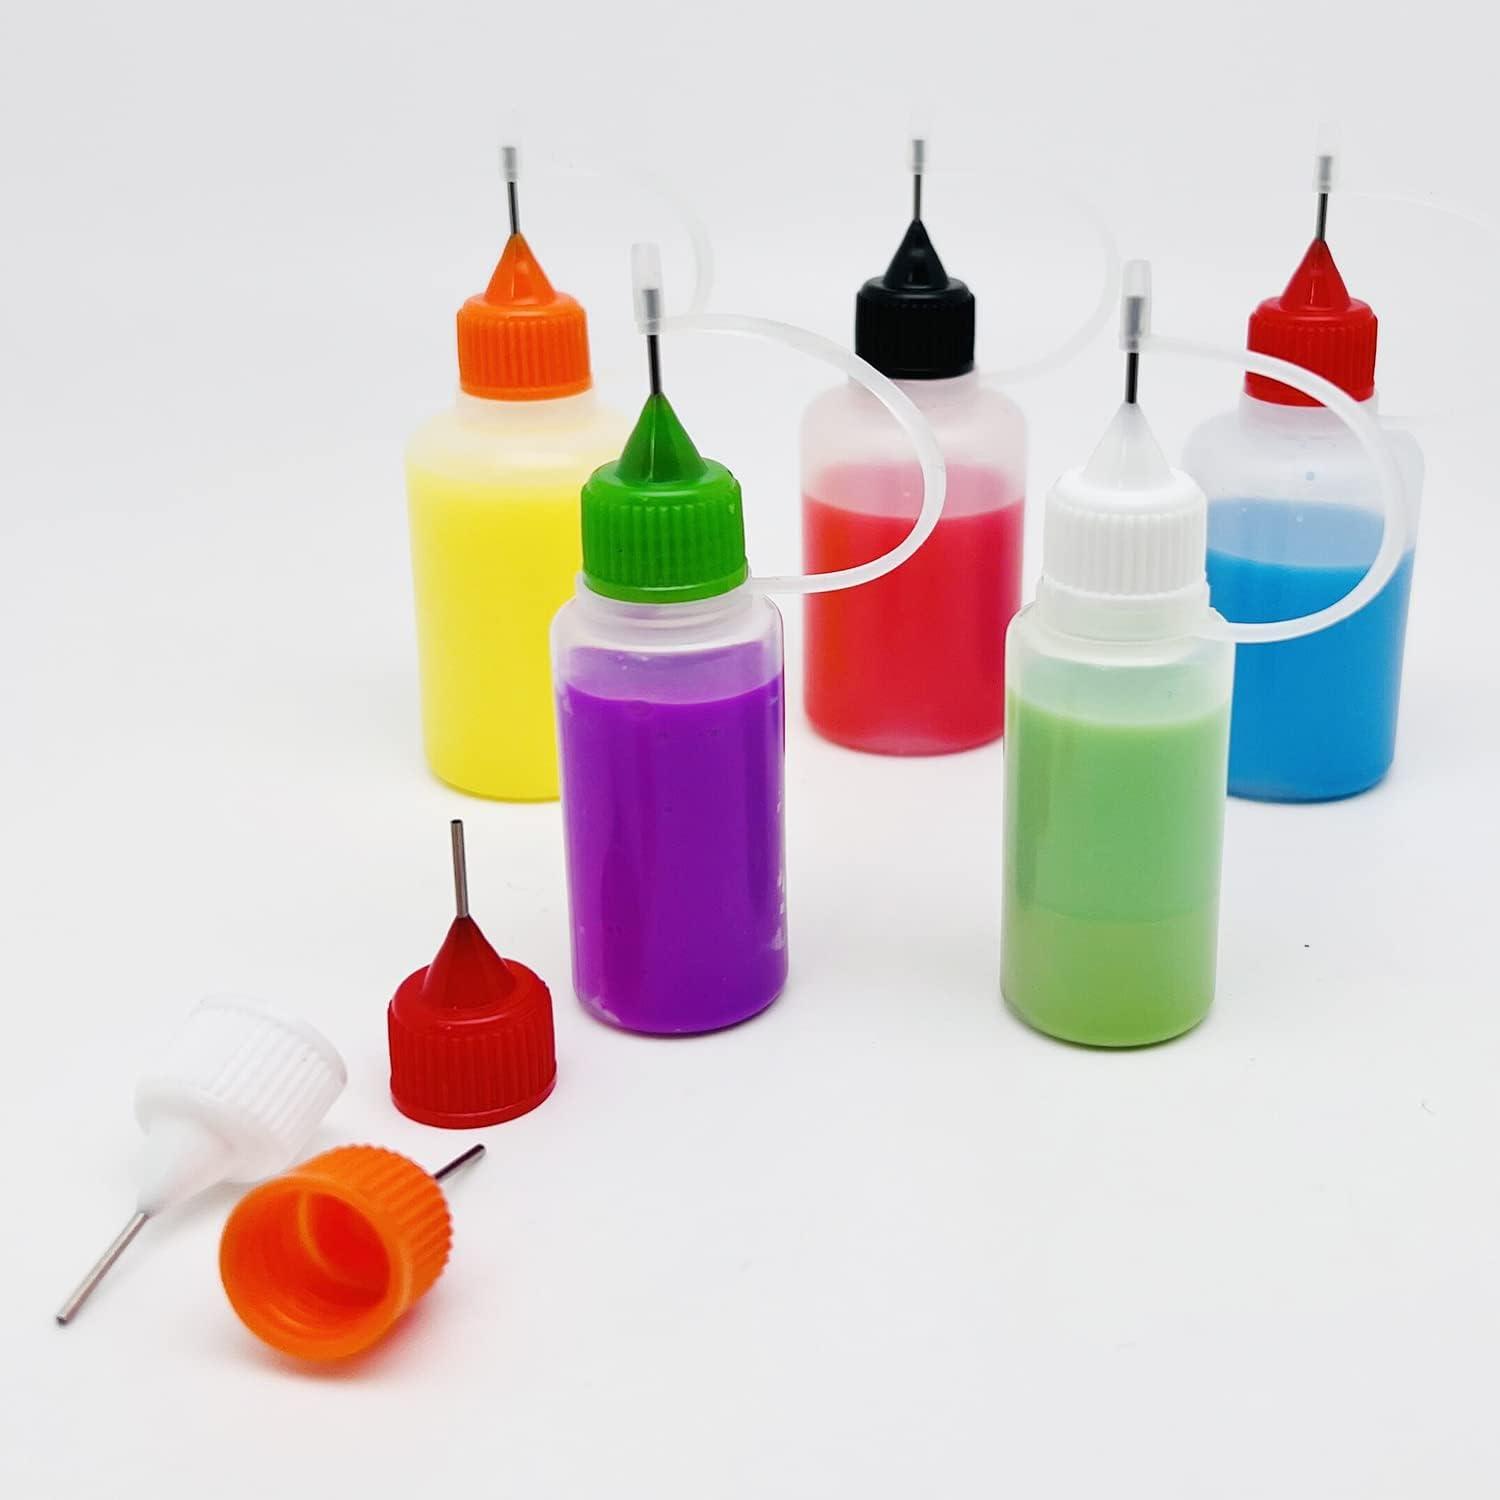 6 Sets of Precision Needle Tip Squeeze Bottles Glue Applicator Bottle Glue Dropper Bottle, Size: One Size